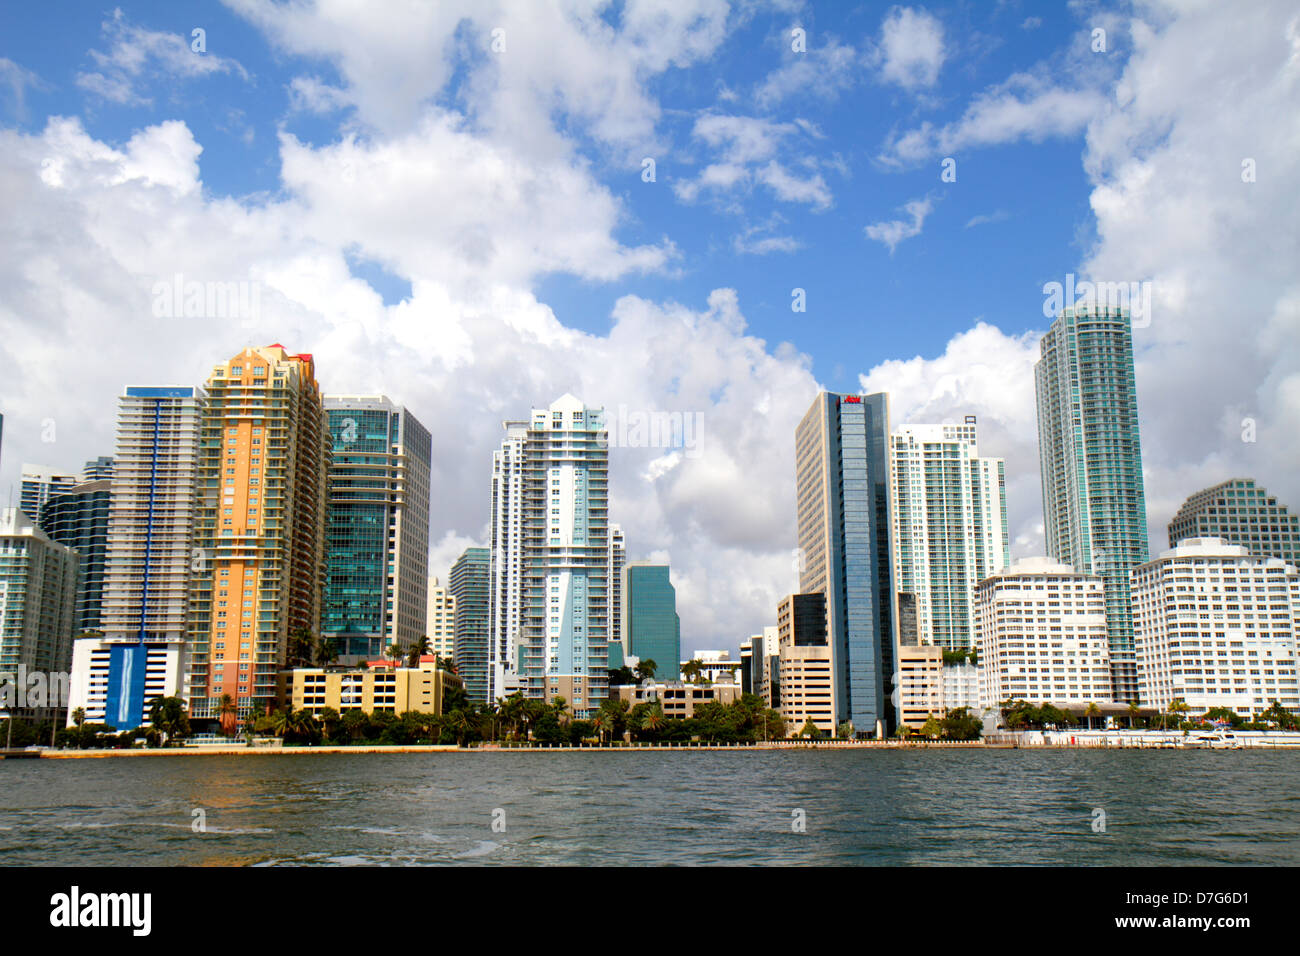 Miami Florida,city skyline,Brickell Financial District,Biscayne Bay,water,sky,clouds,high rise skyscraper skyscrapers building buildings condominium r Stock Photo